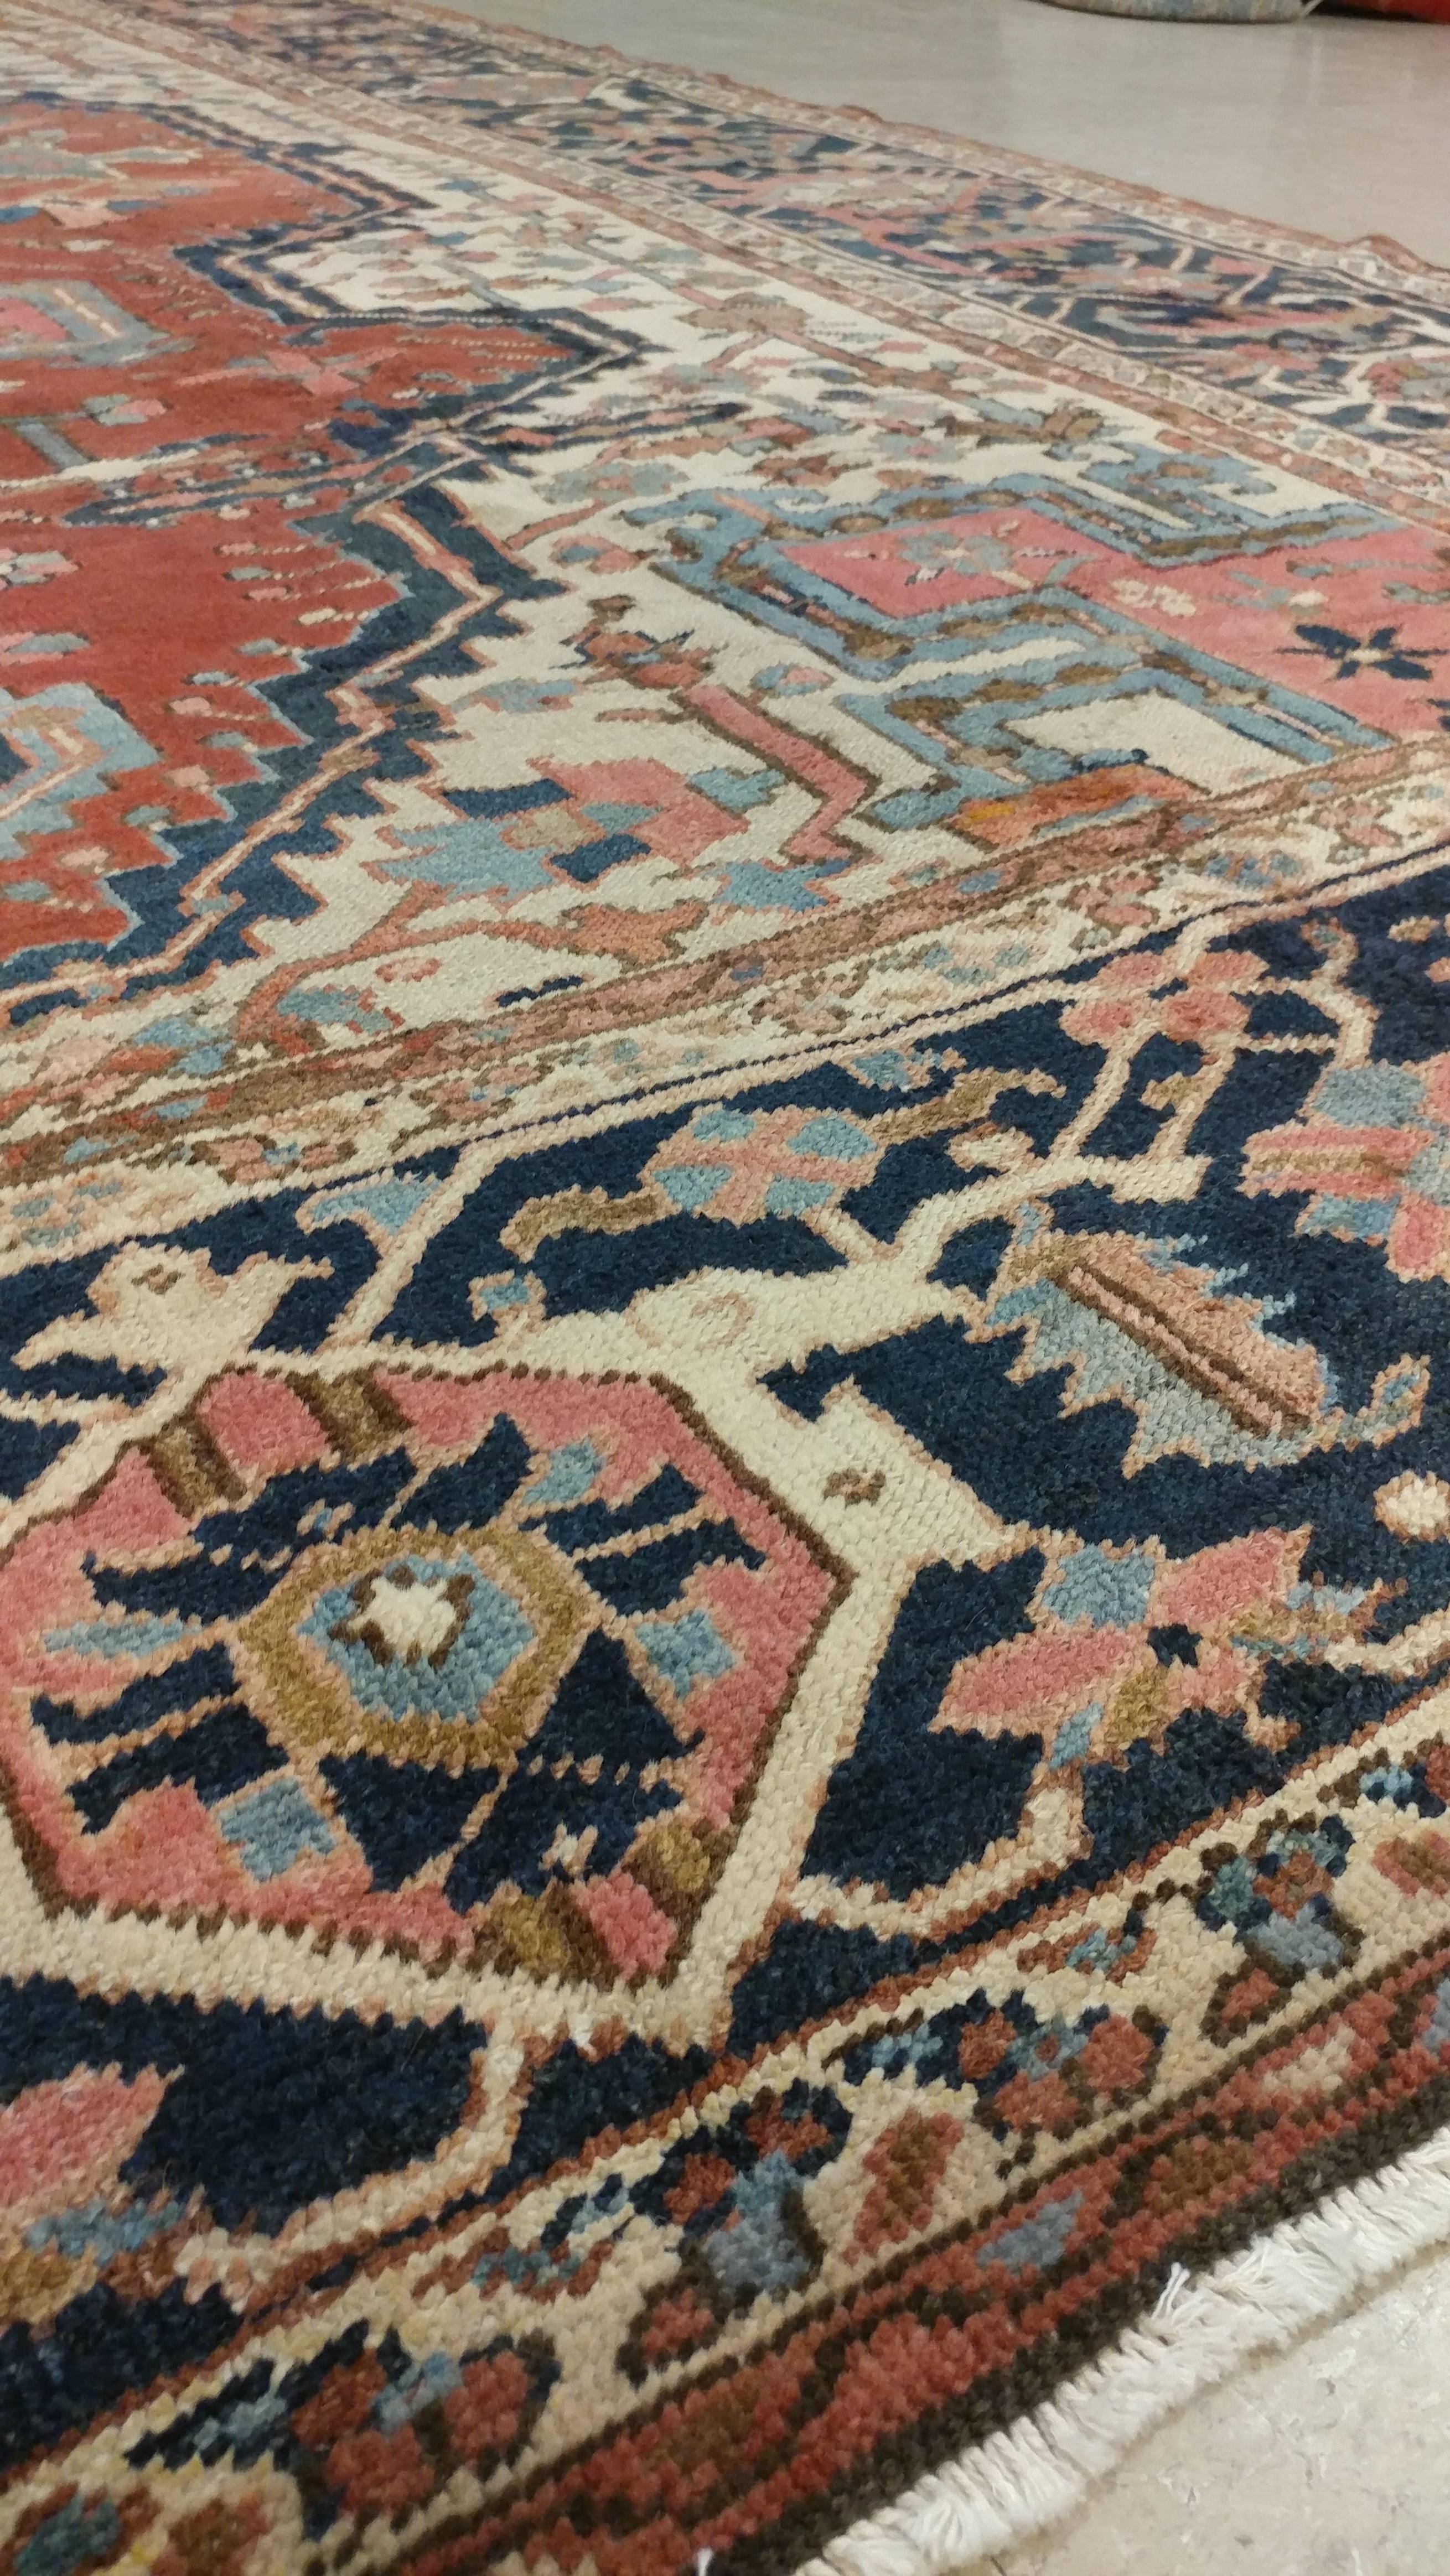 Hand-Knotted Antique Bakhshaish Carpet, Persian Handmade Rug, Rust, Navy, Ivory, Light Blue